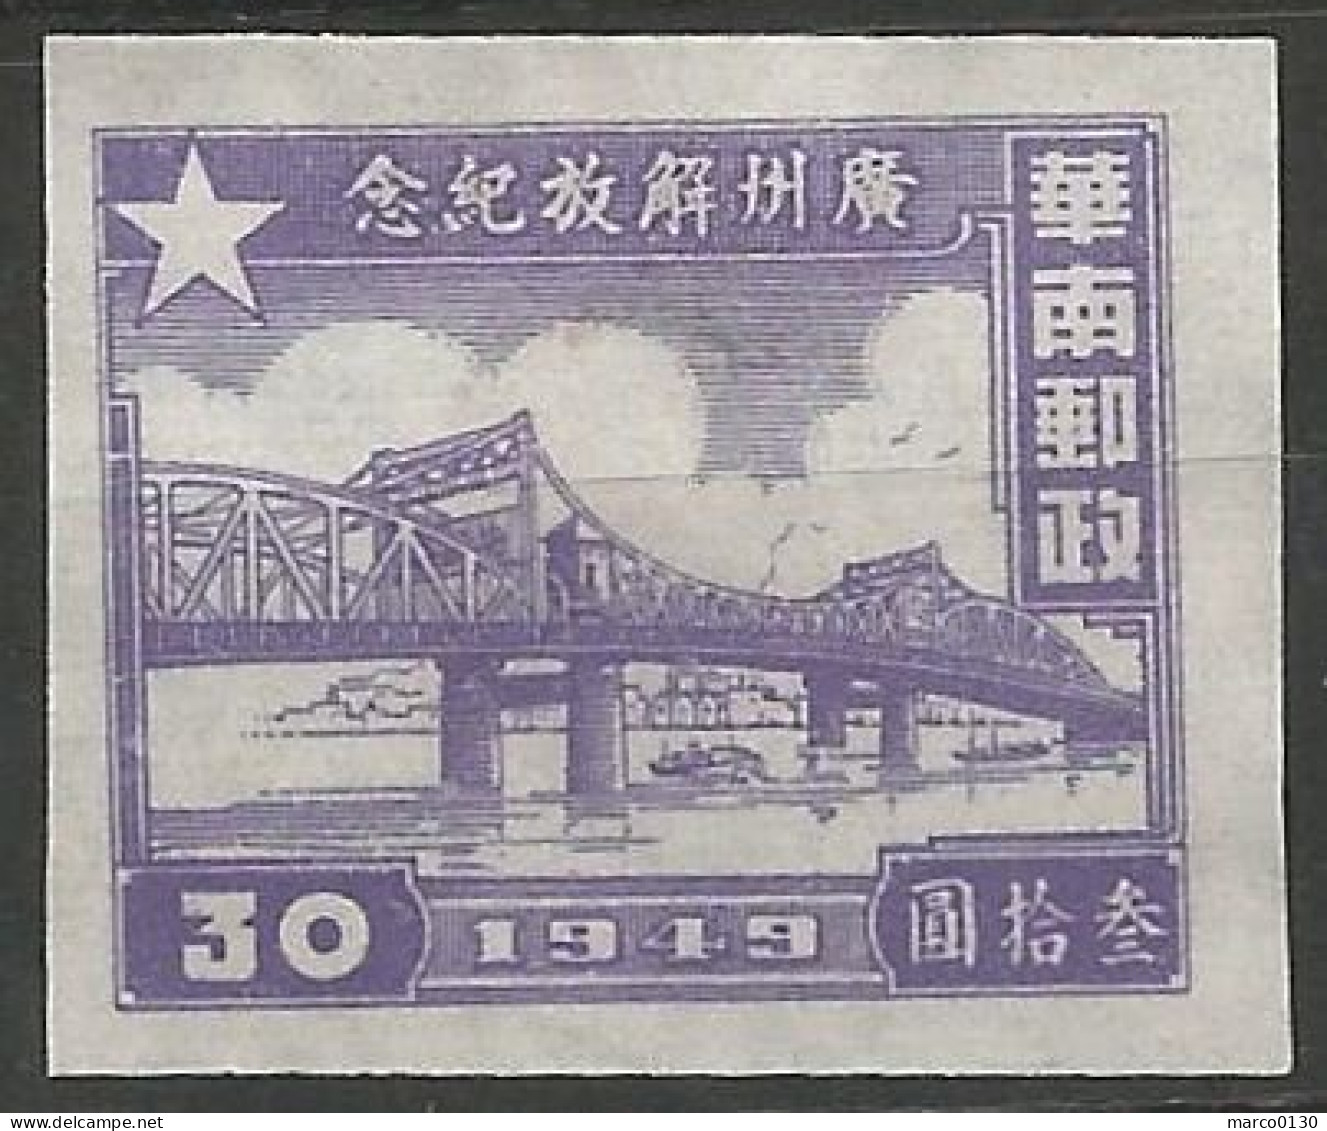 CHINE / CHINE DU SUD N° 1 + N° 2 + N° 3 + N° 4 + N° 5 NEUF Sans Gomme - Chine Du Sud 1949-50